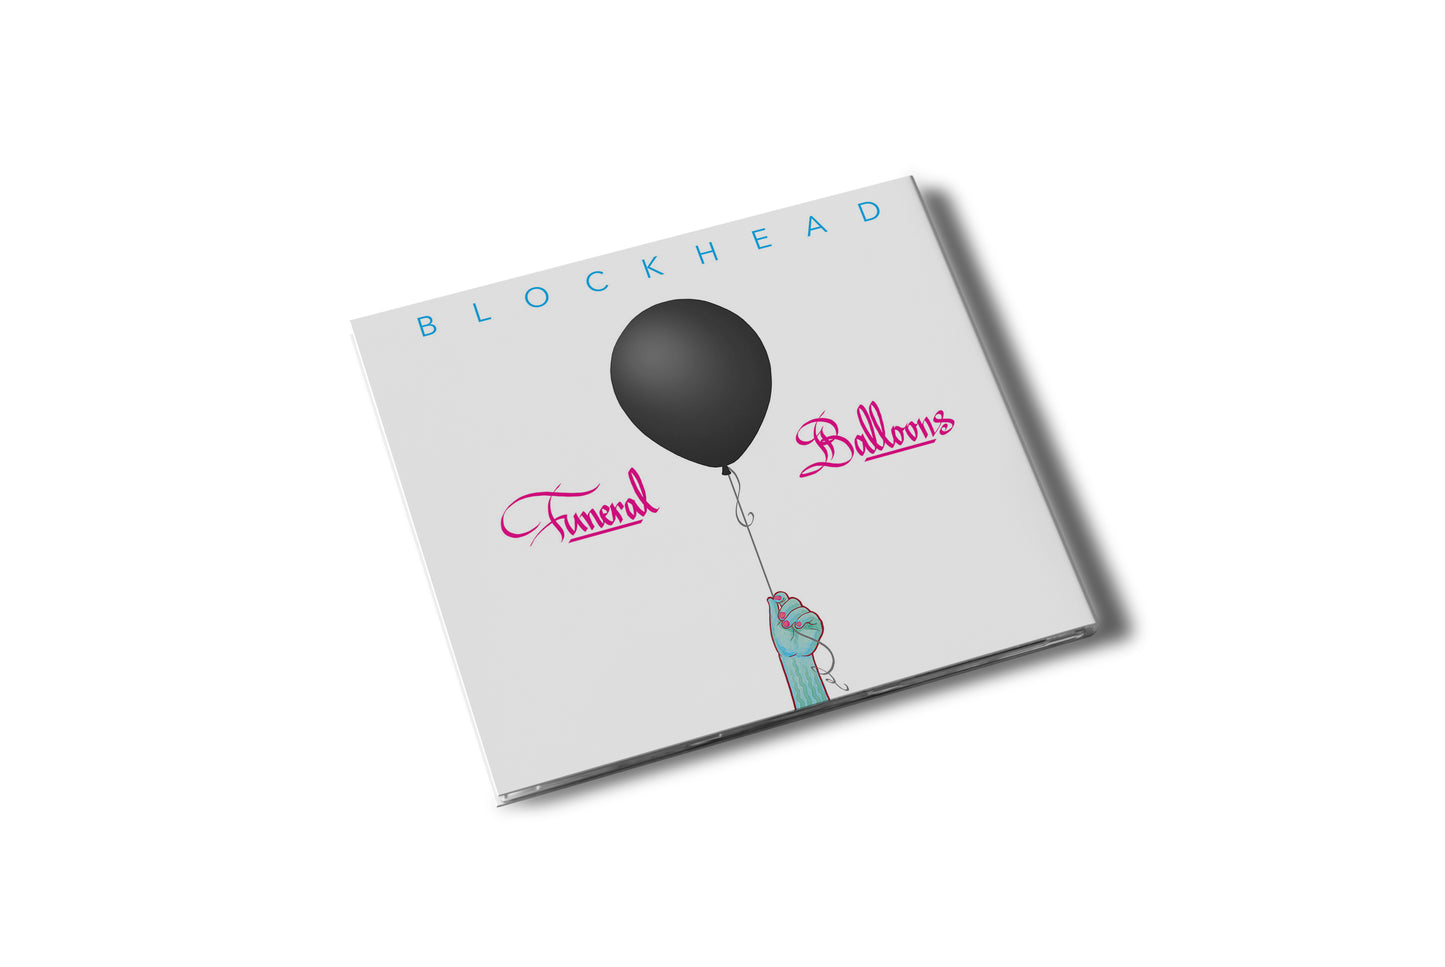 Funeral Balloons (CD)